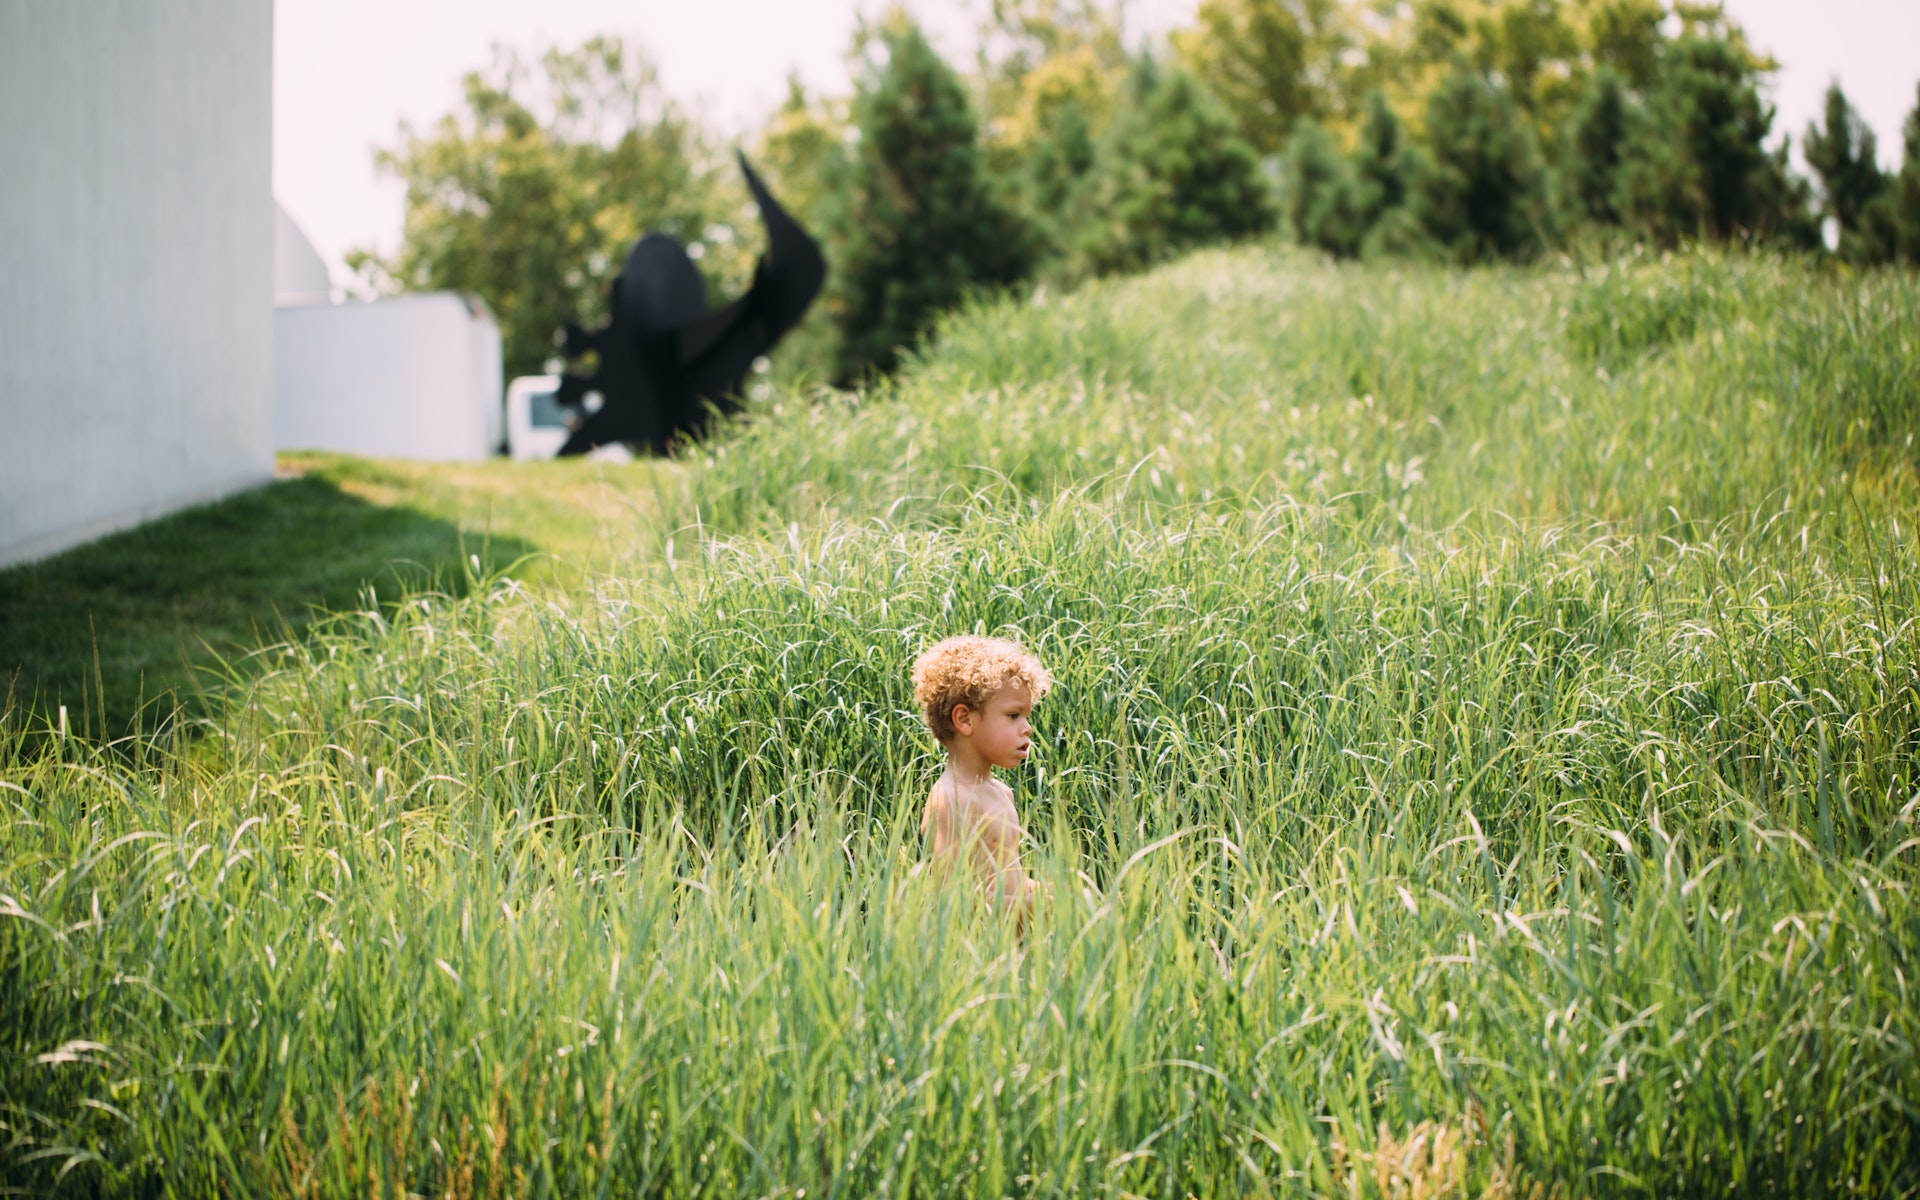 A young boy stands among tall grass in hte Minneapolis Sculpture Garden